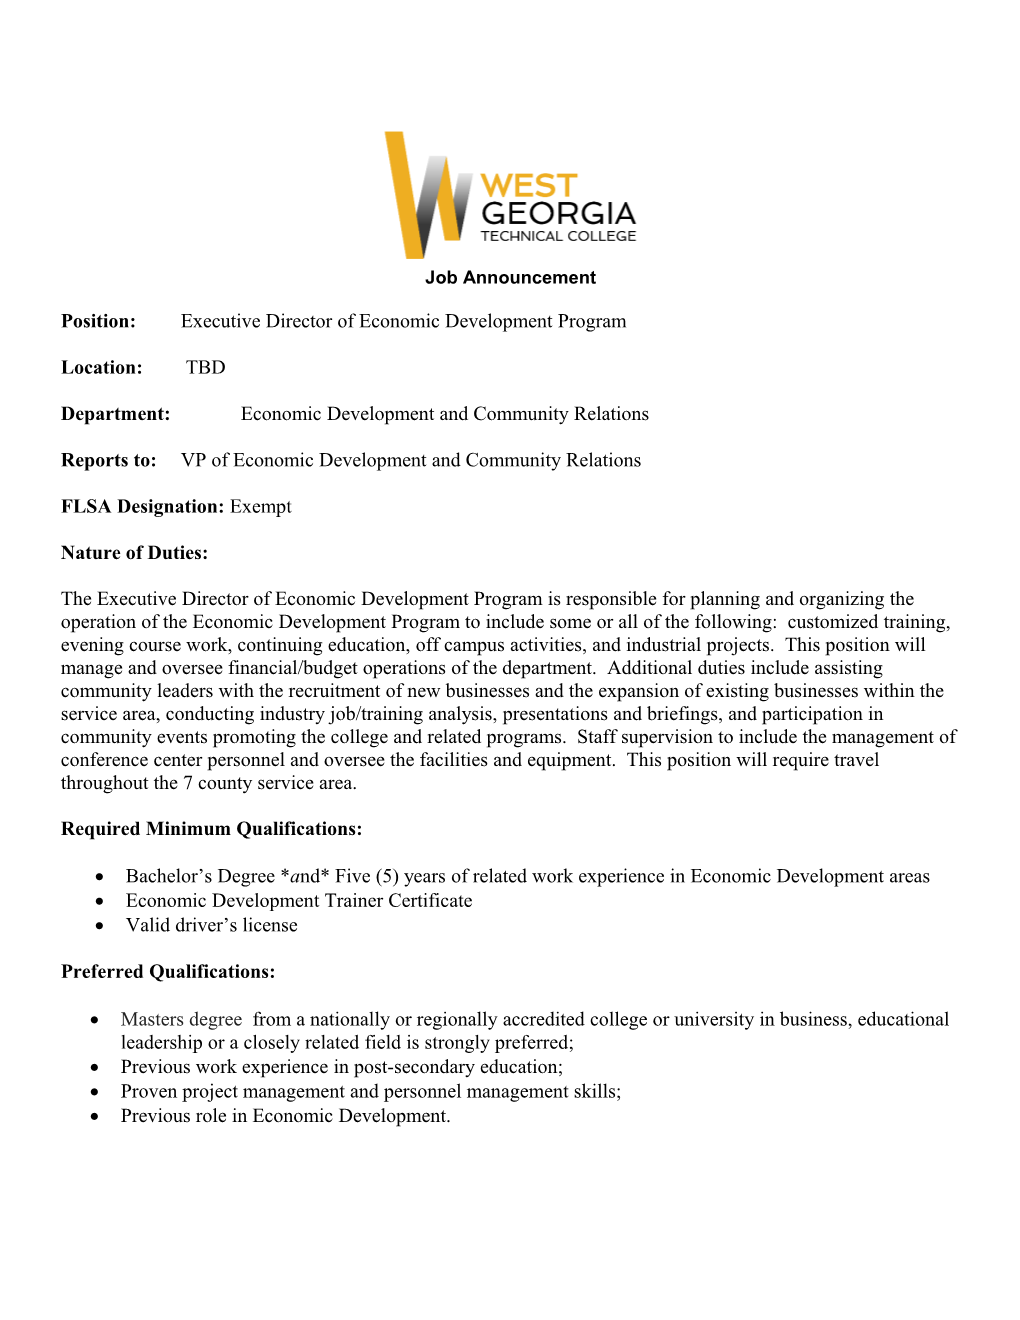 Position: Executive Director Ofeconomic Development Program